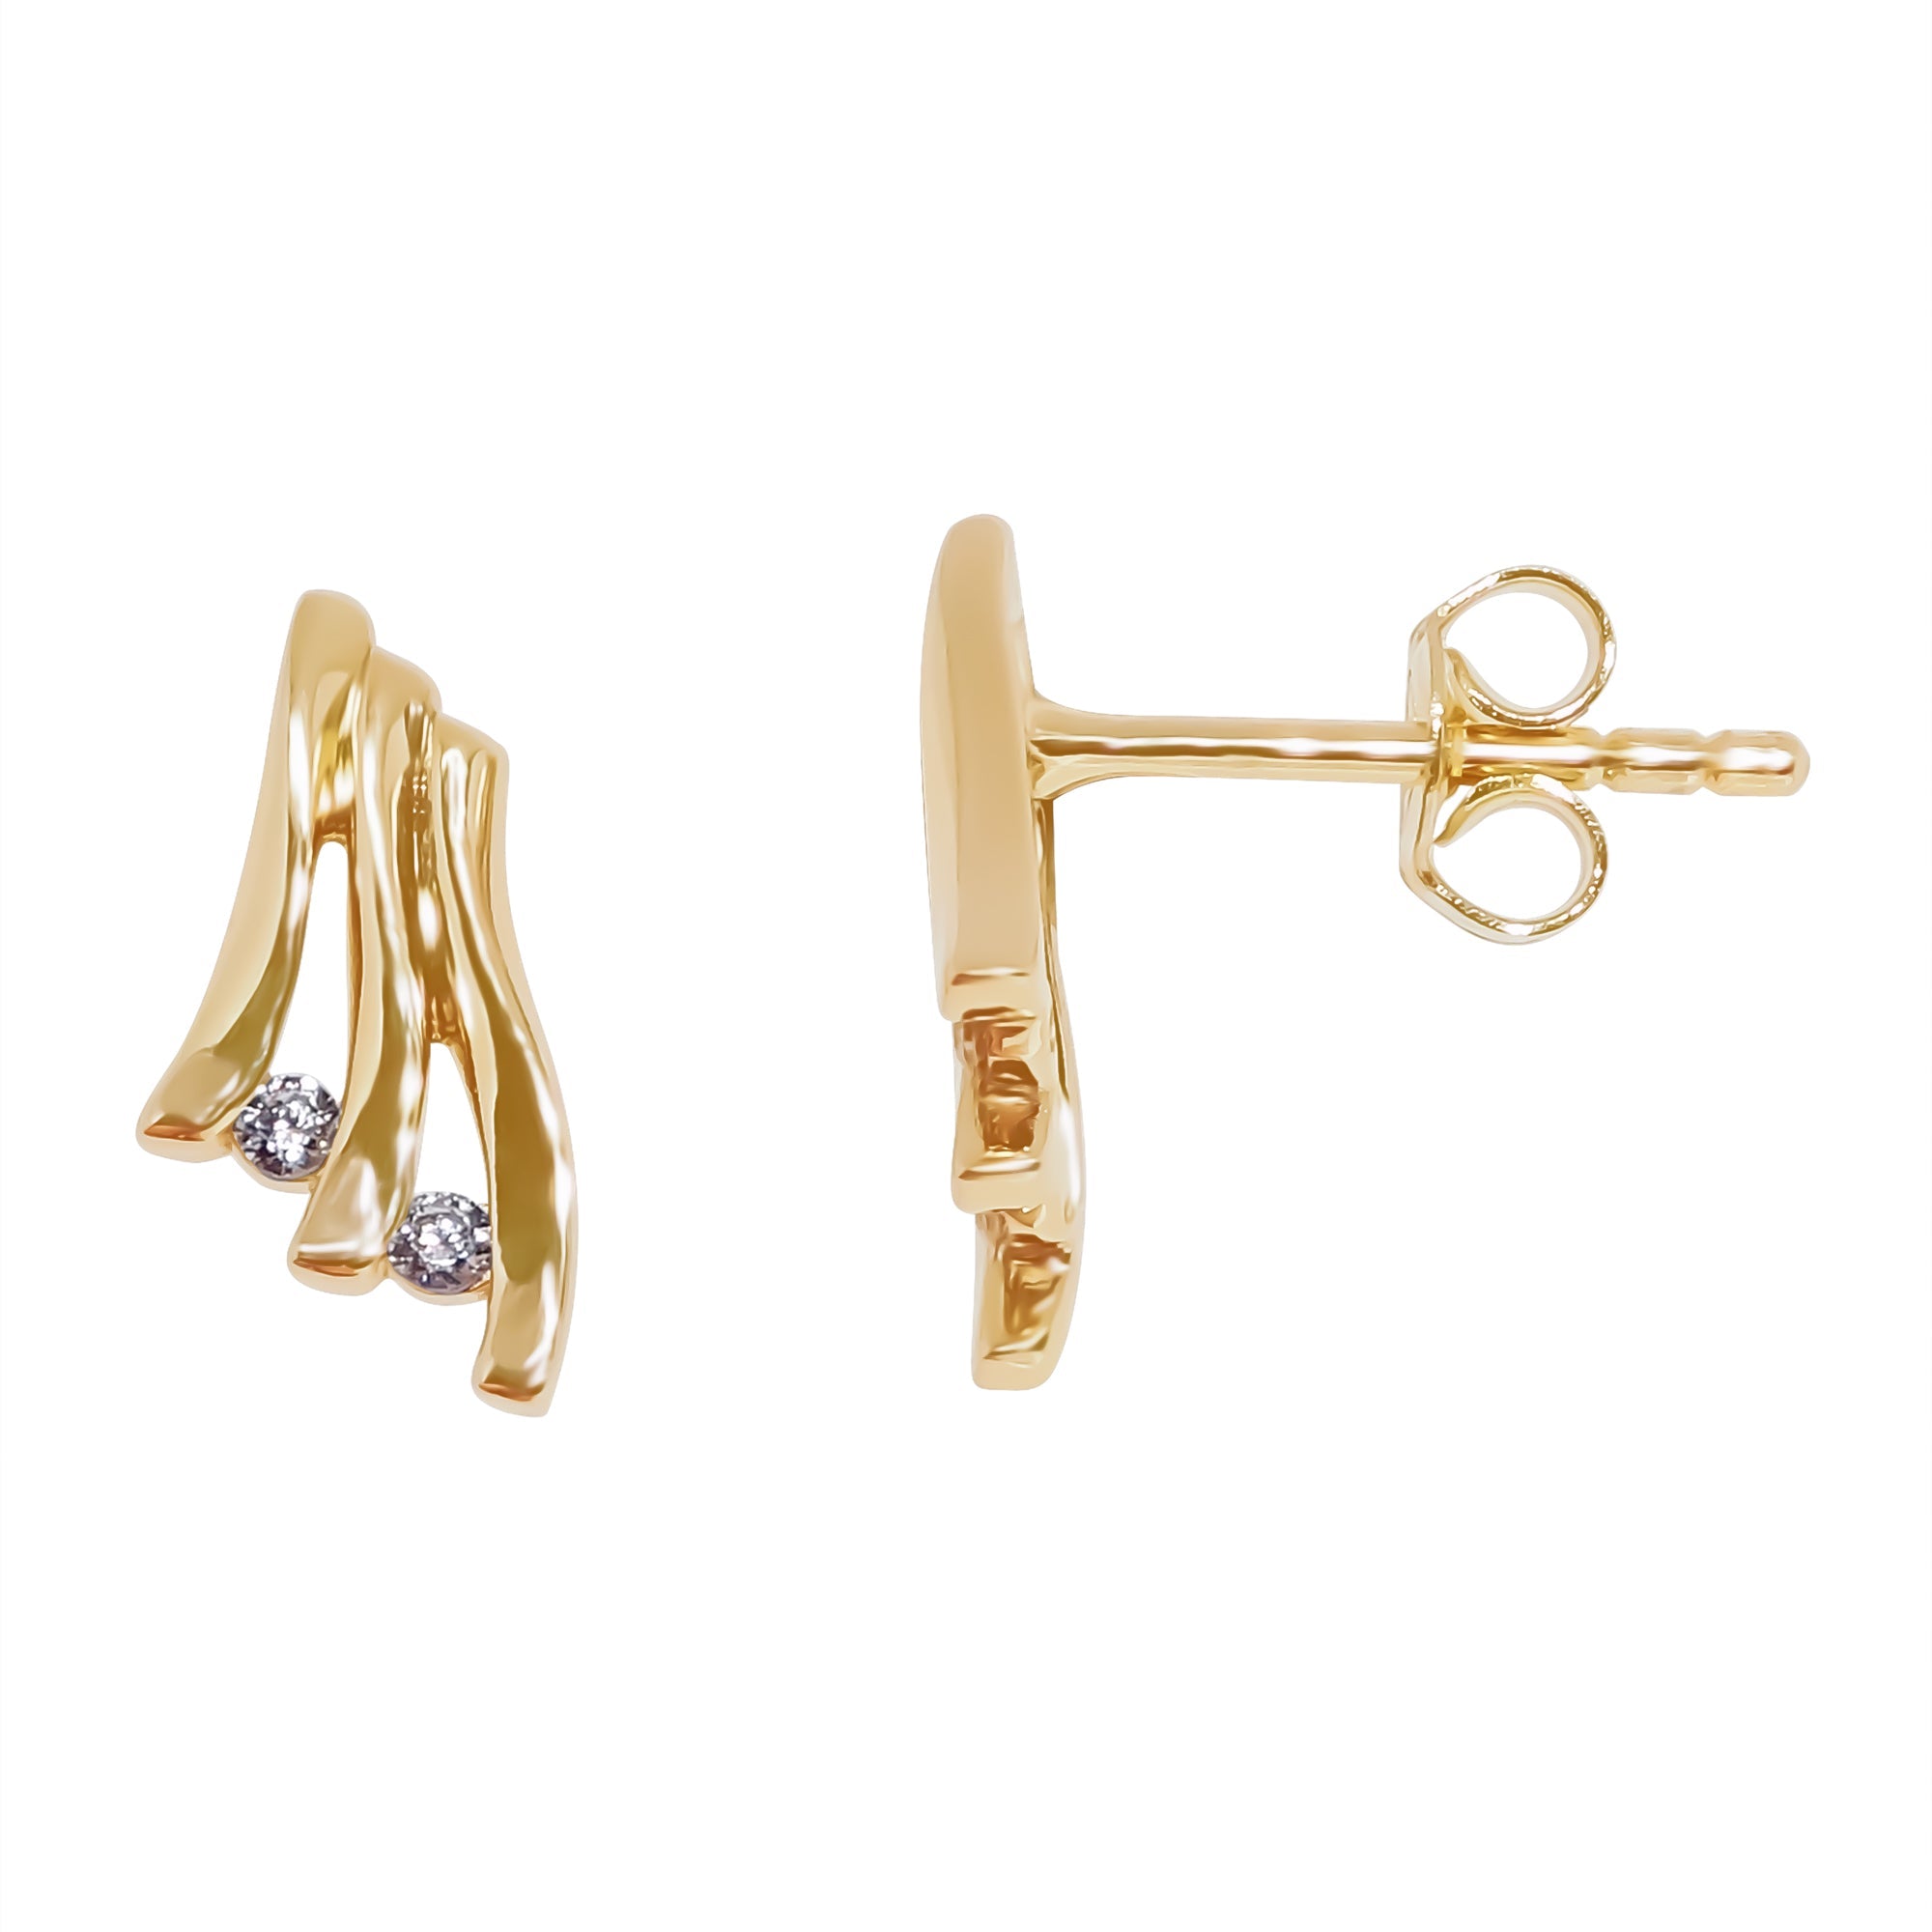 9ct gold cz stud earrings